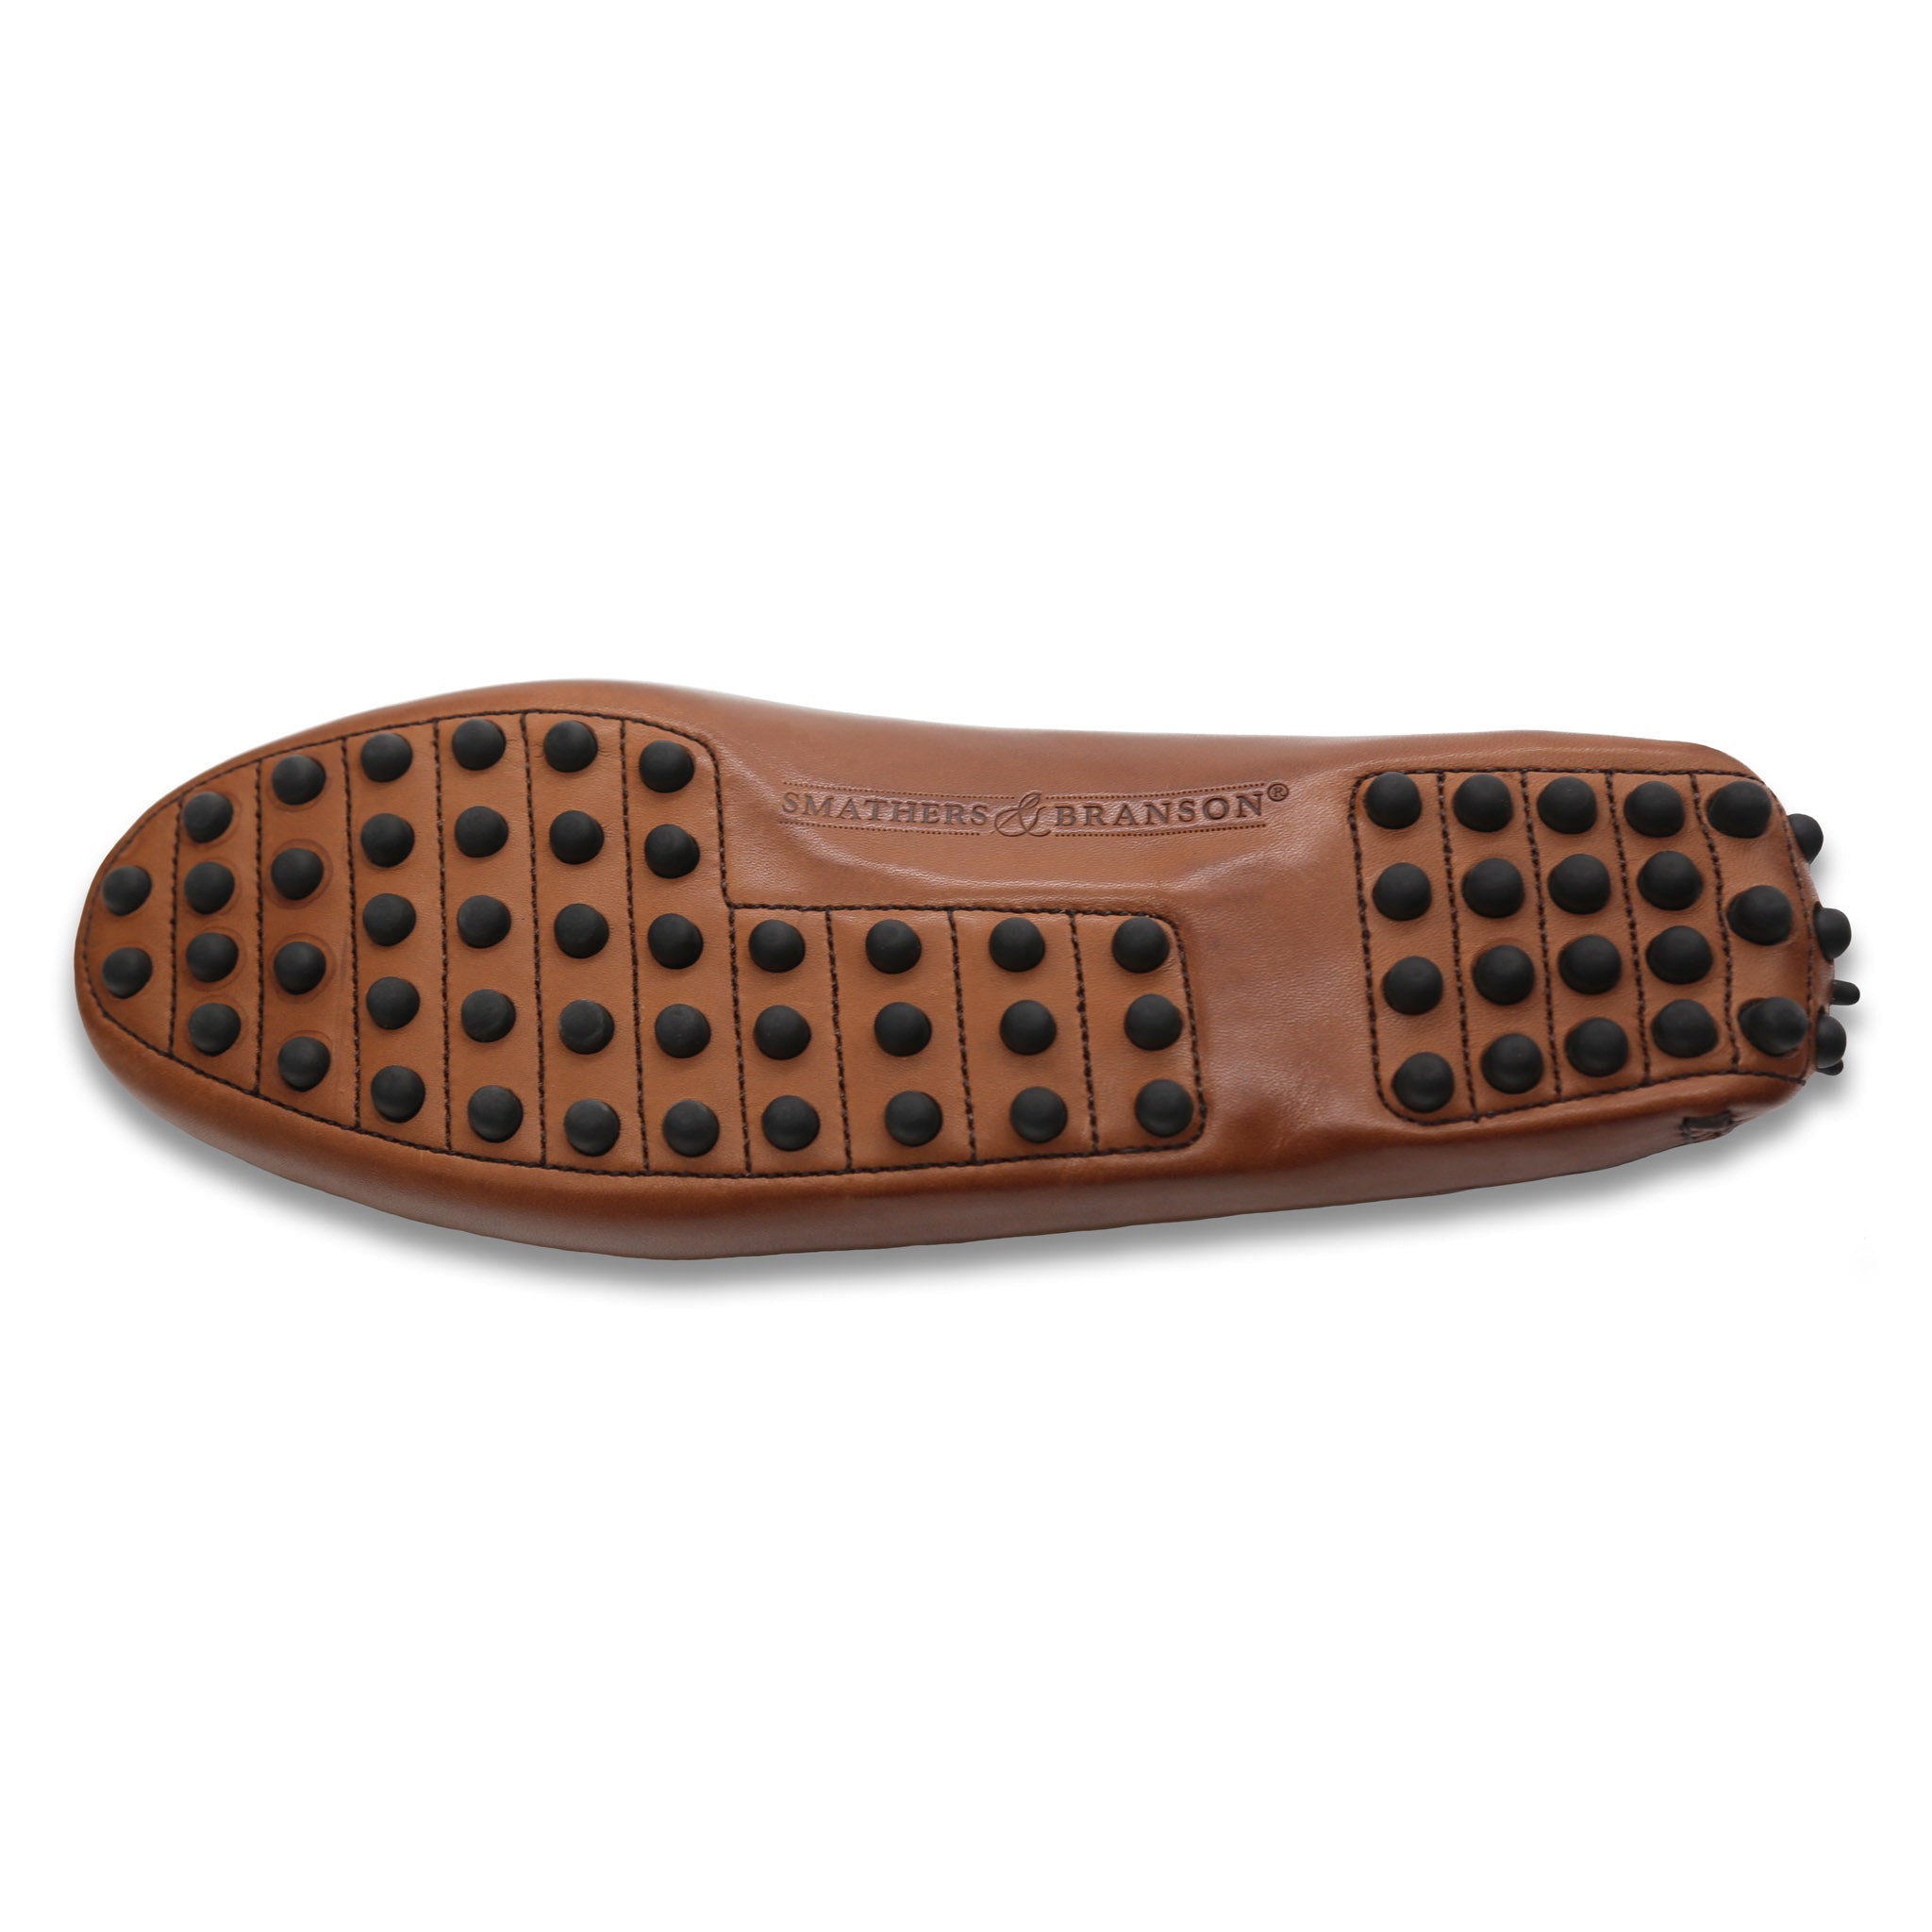 Villanova Surcingle Driving Shoes (Classic Navy-Azure) (Chestnut Leather-Logo)